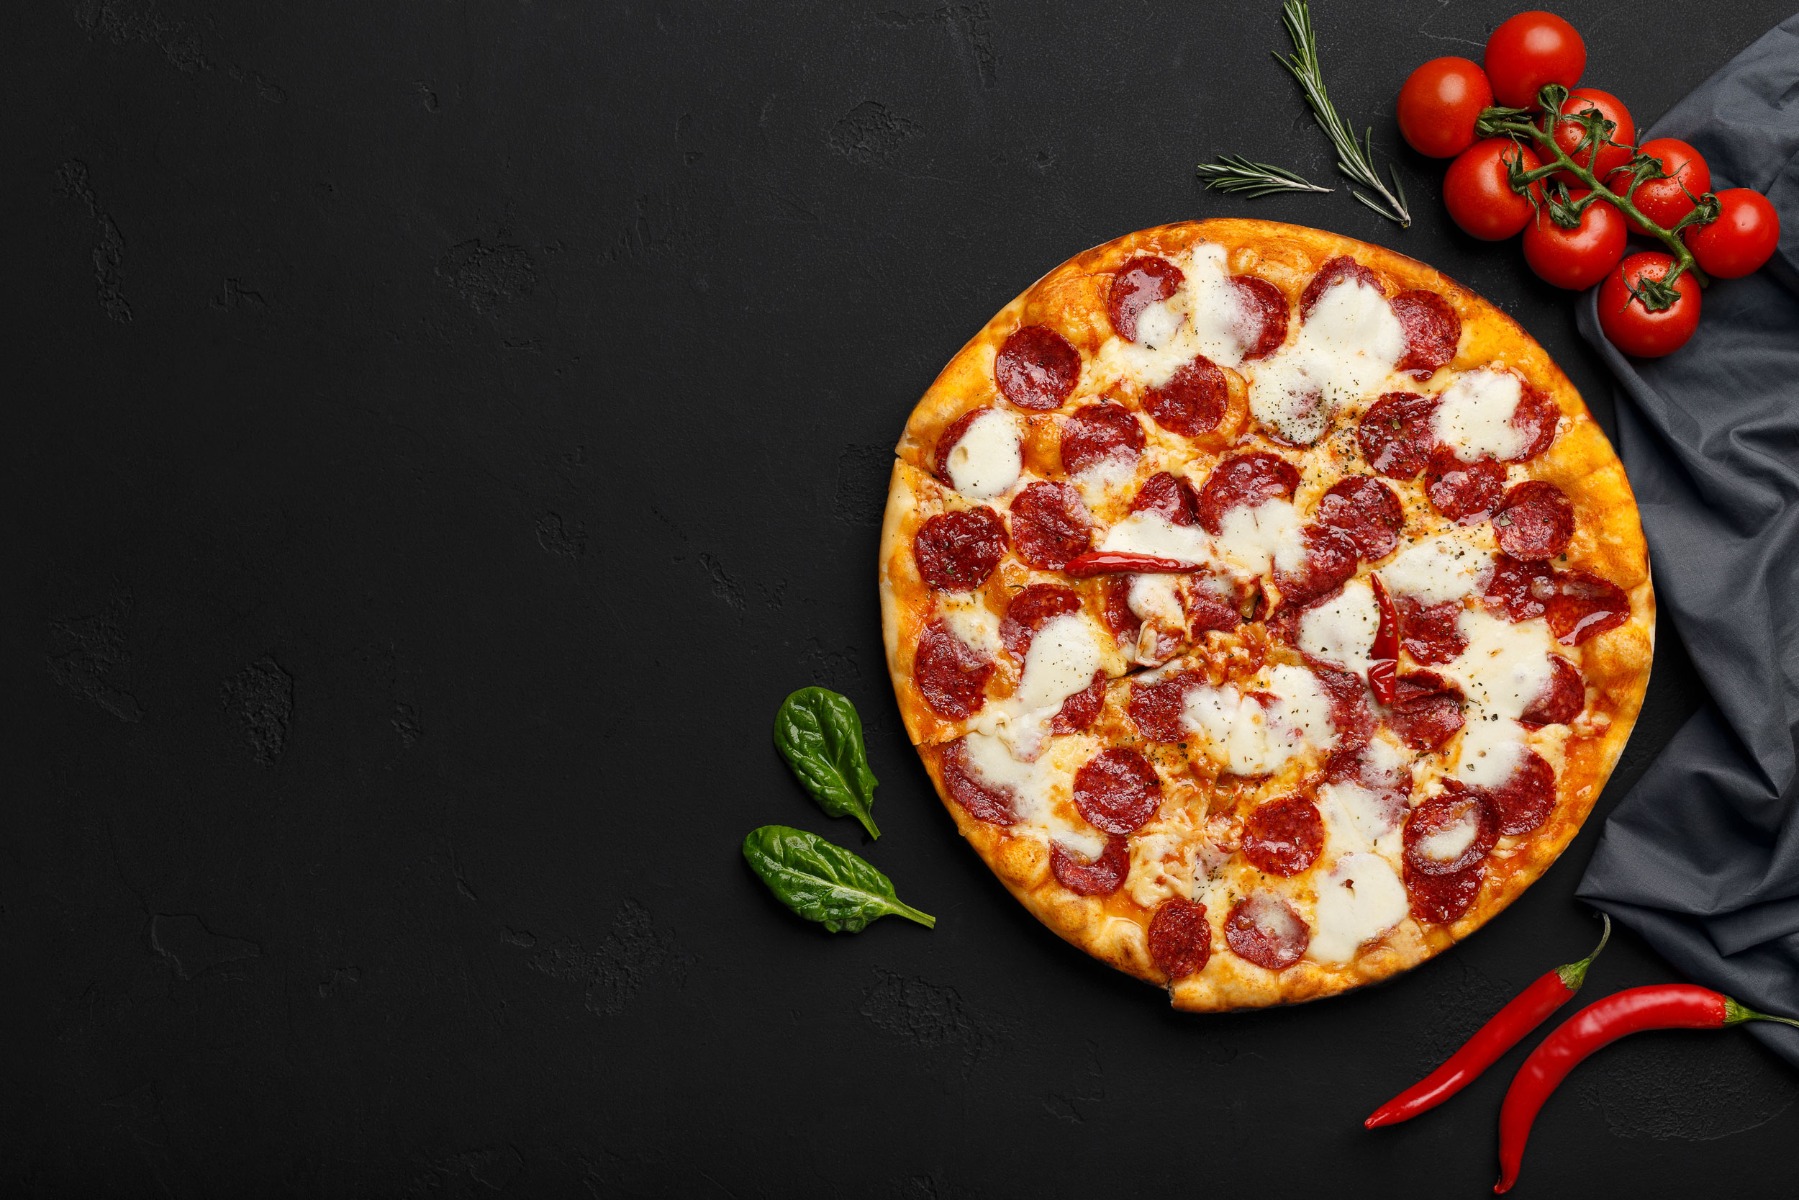 Prik en Tik - Wijnstreken - Foodpairing - Junkfood pizza